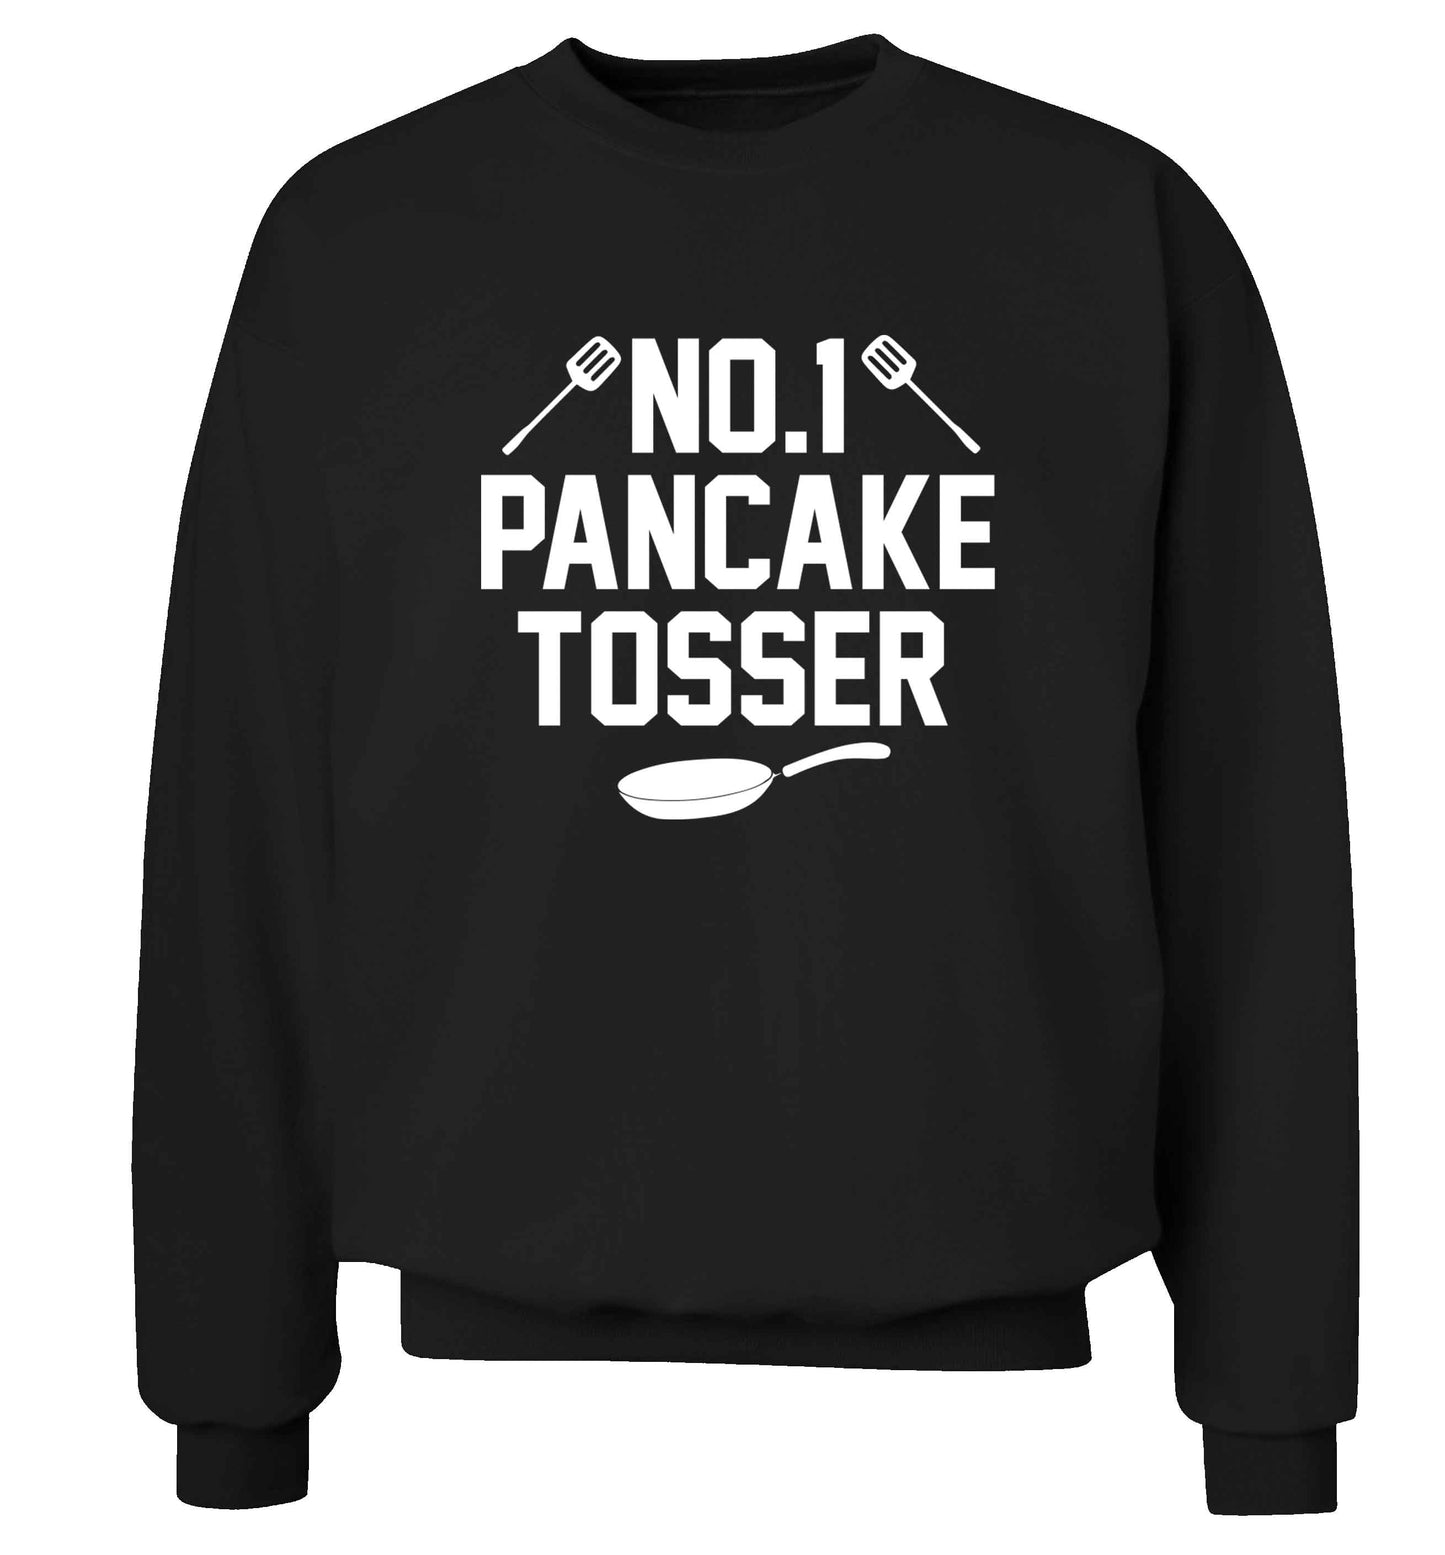 No.1 Pancake tosser adult's unisex black sweater 2XL